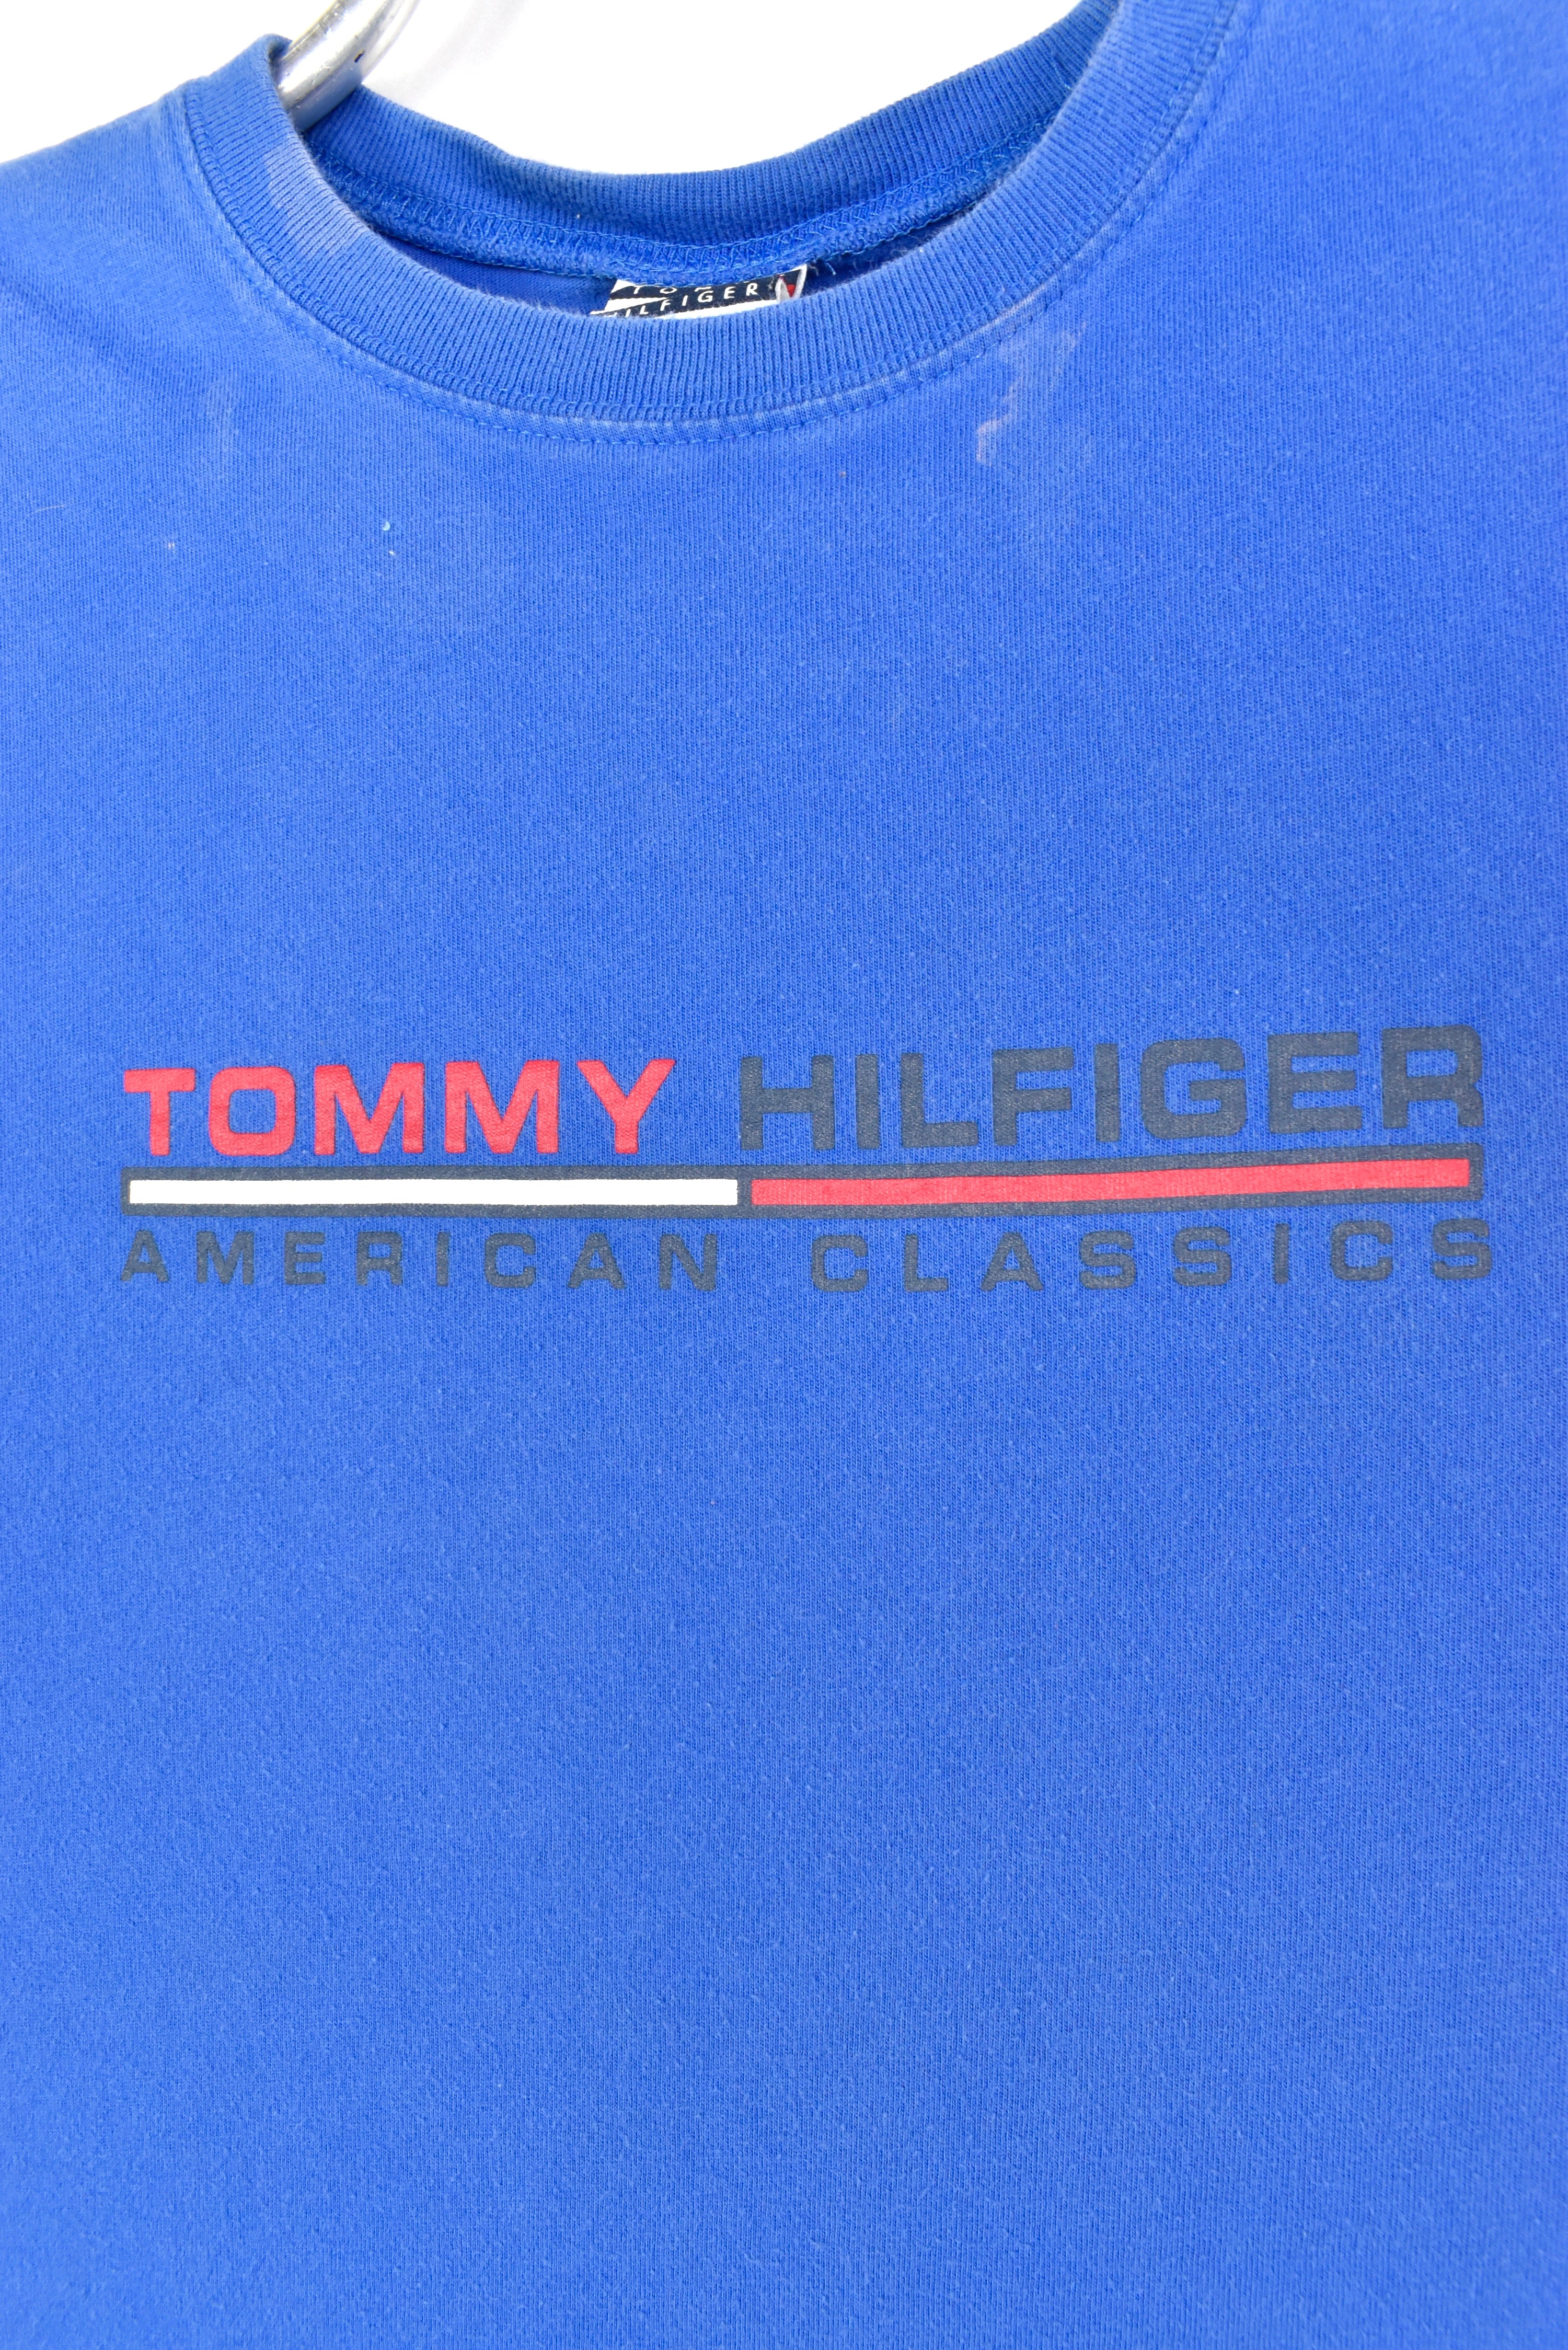 VINTAGE WOMEN'S TOMMY HILFIGER BLUE T-SHIRT | SMALL TOMMY HILFIGER